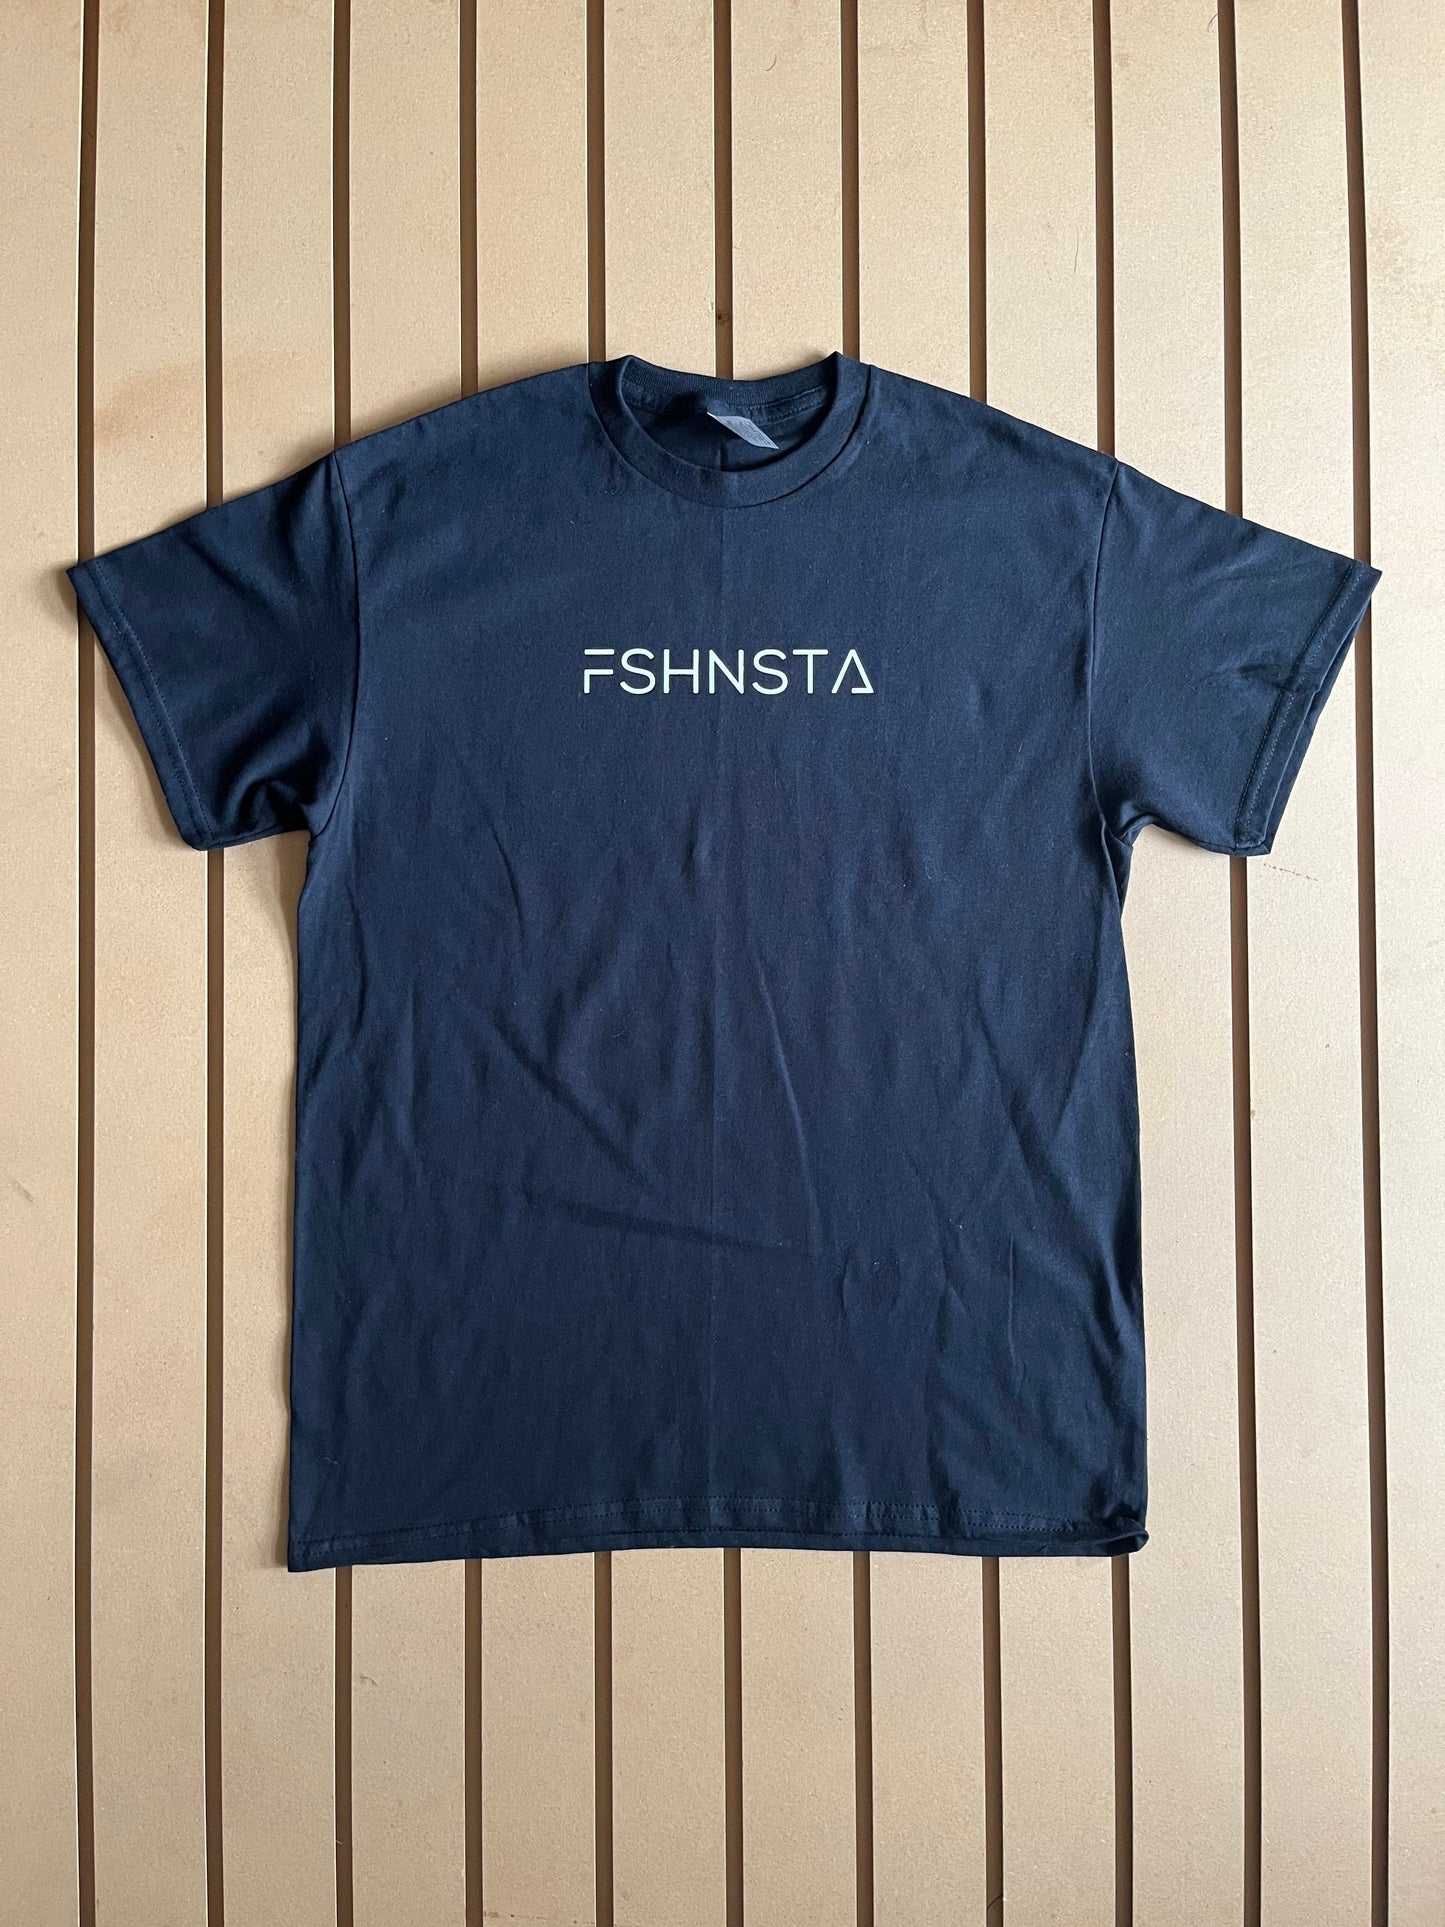 Fshnsta Logo - Relaxed Fit Tee Black